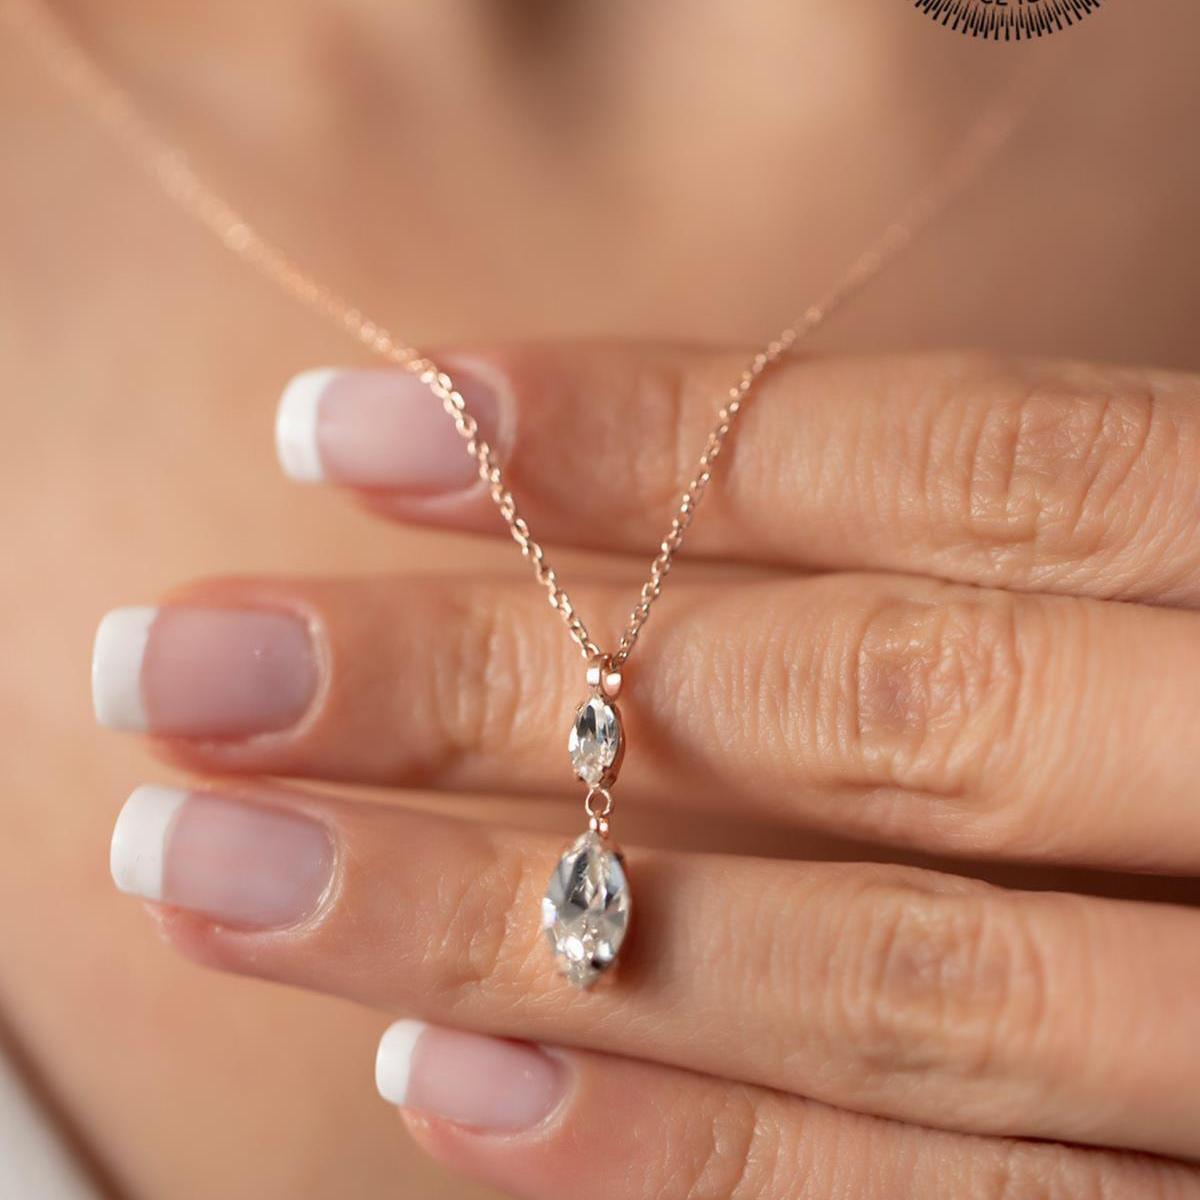 Swarovski Necklace Sale • Swarovski Crystal Necklace • Gift For Her - Trending Silver Gifts